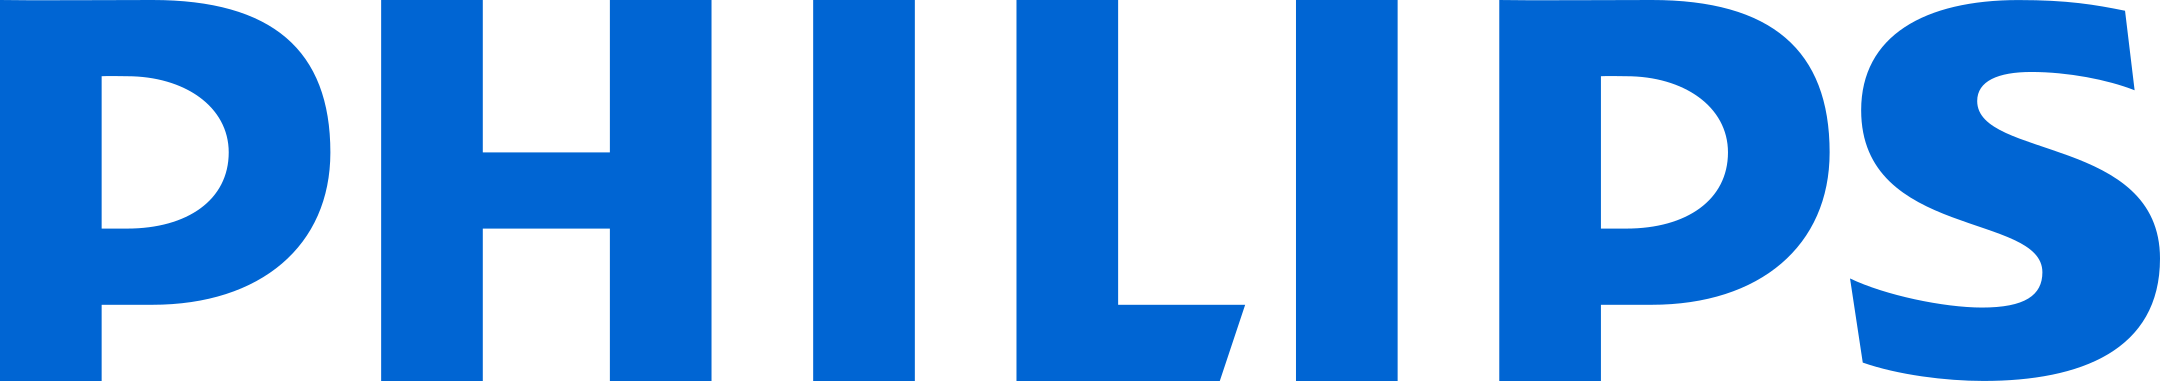 philips-logo-1-1